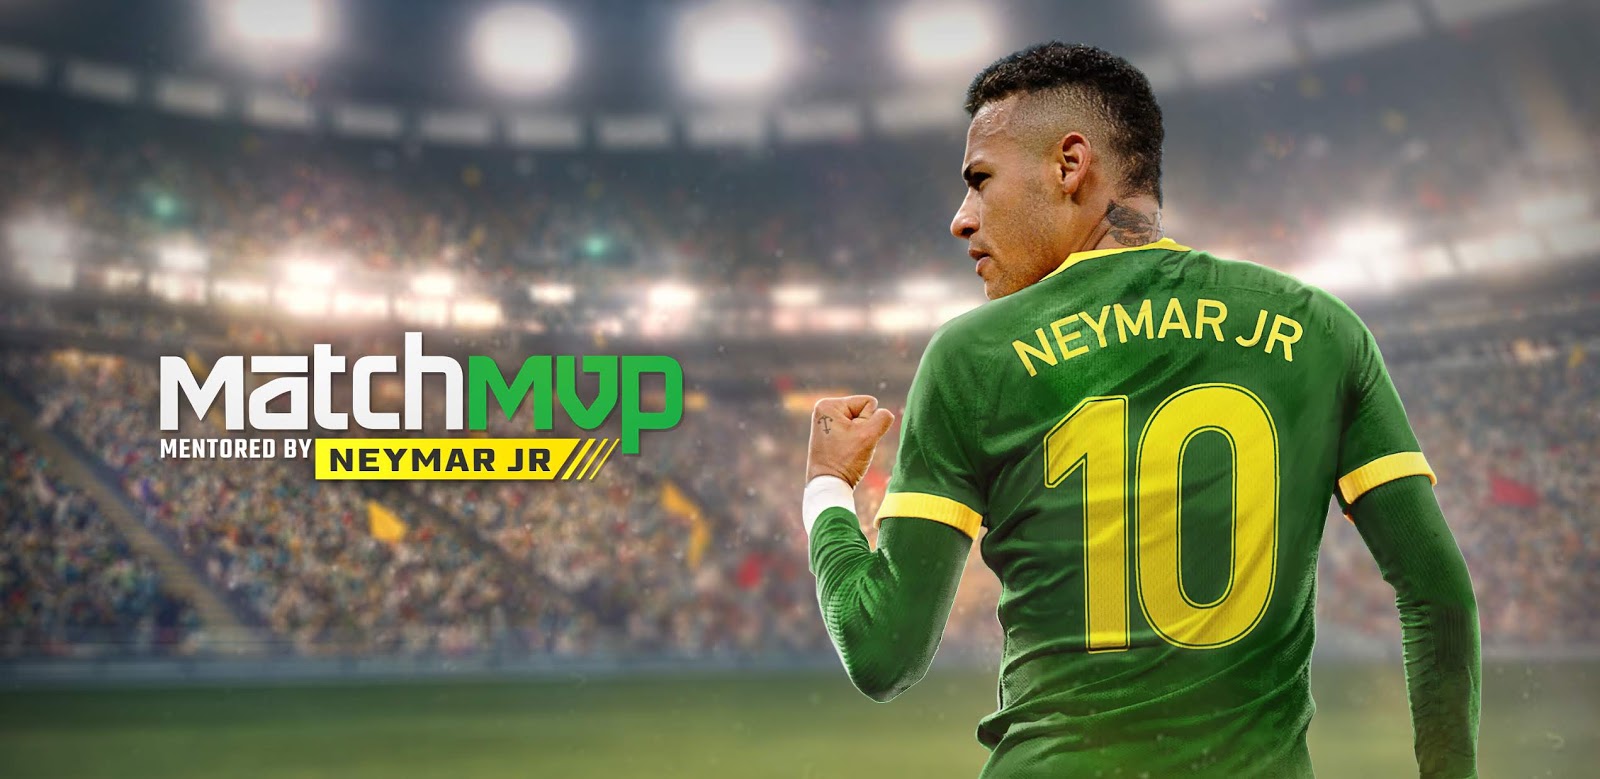 Match MVP Neymar Jr.